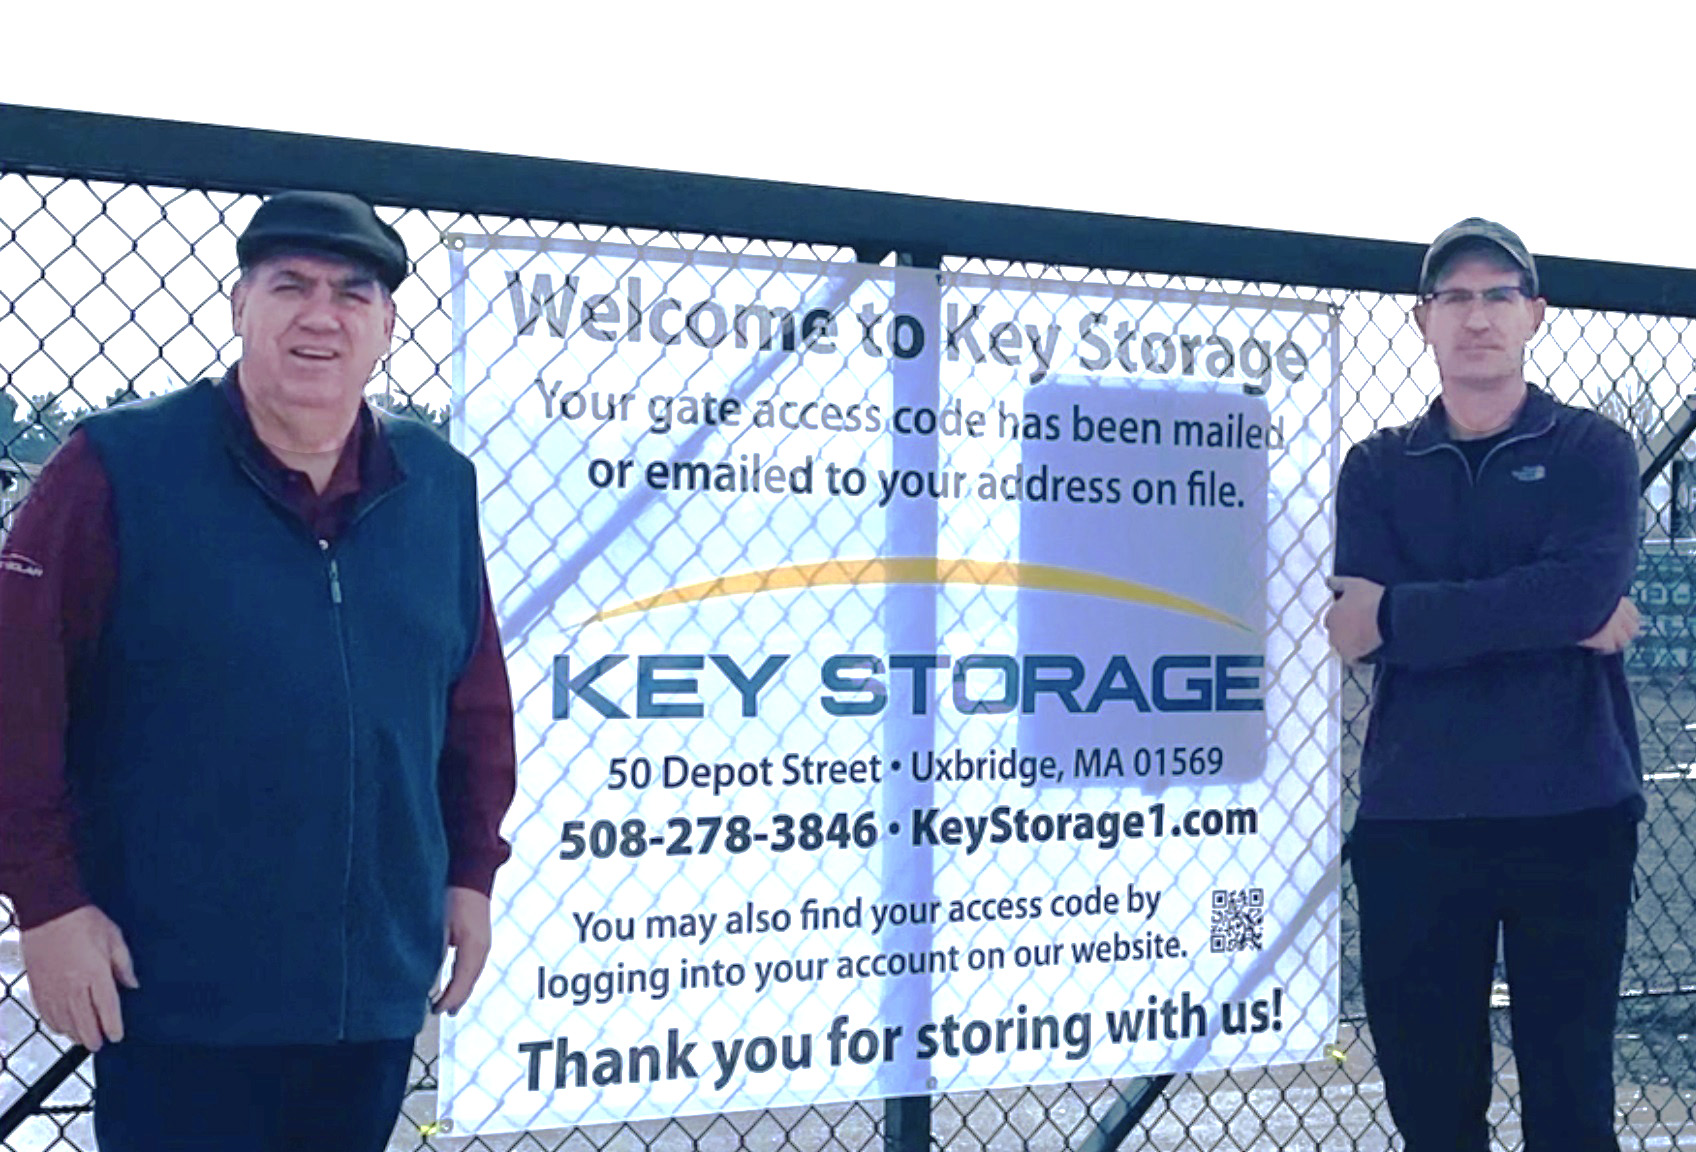 Business Profile: Newly expanded Key Storage opens in Uxbridge